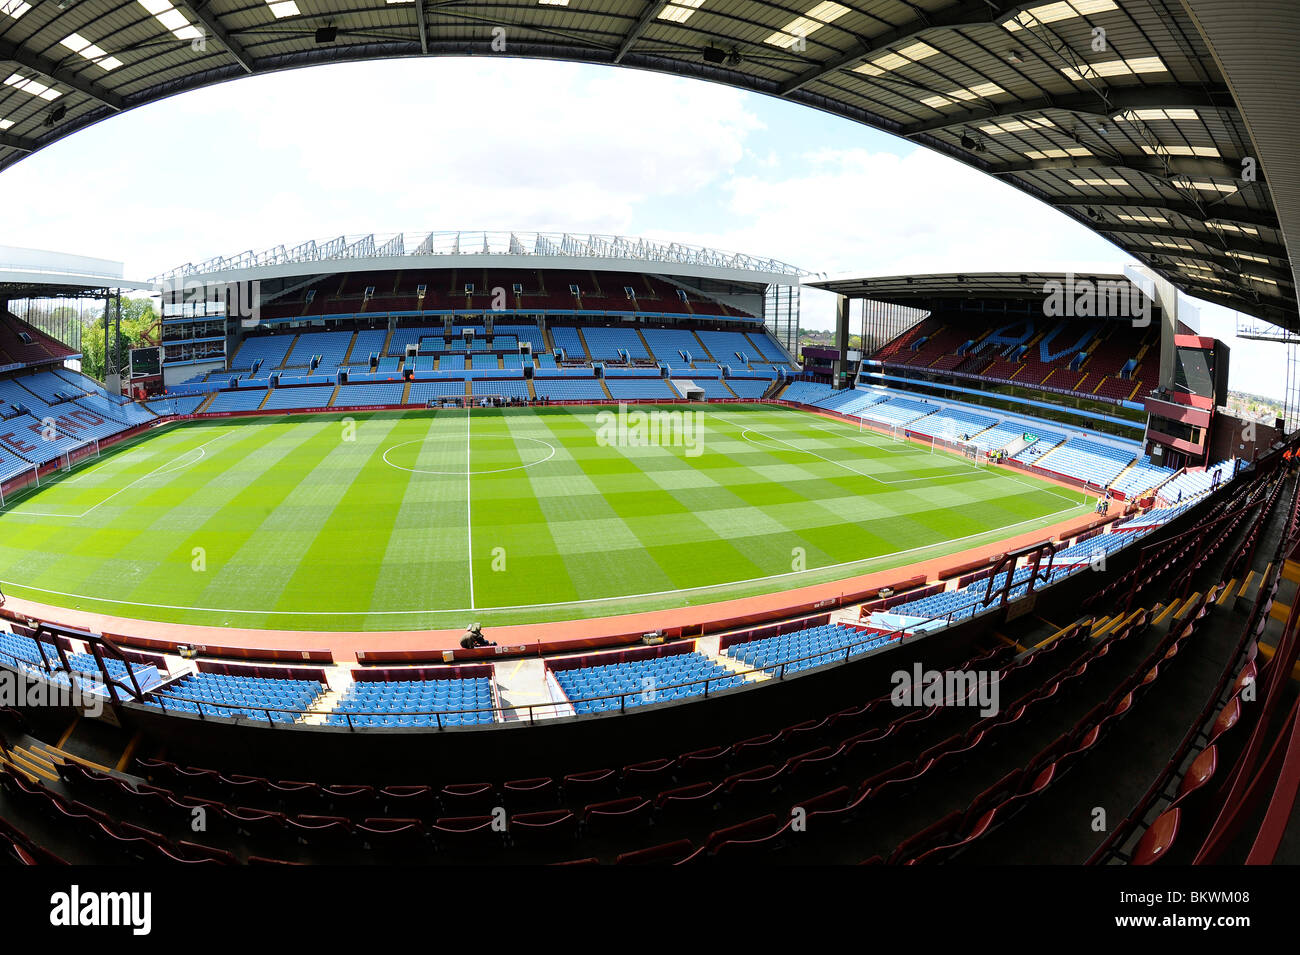 Blick Ins Innere Der Villa Park Stadion Birmingham Haus Von Aston Villa Football Club Stockfotografie Alamy